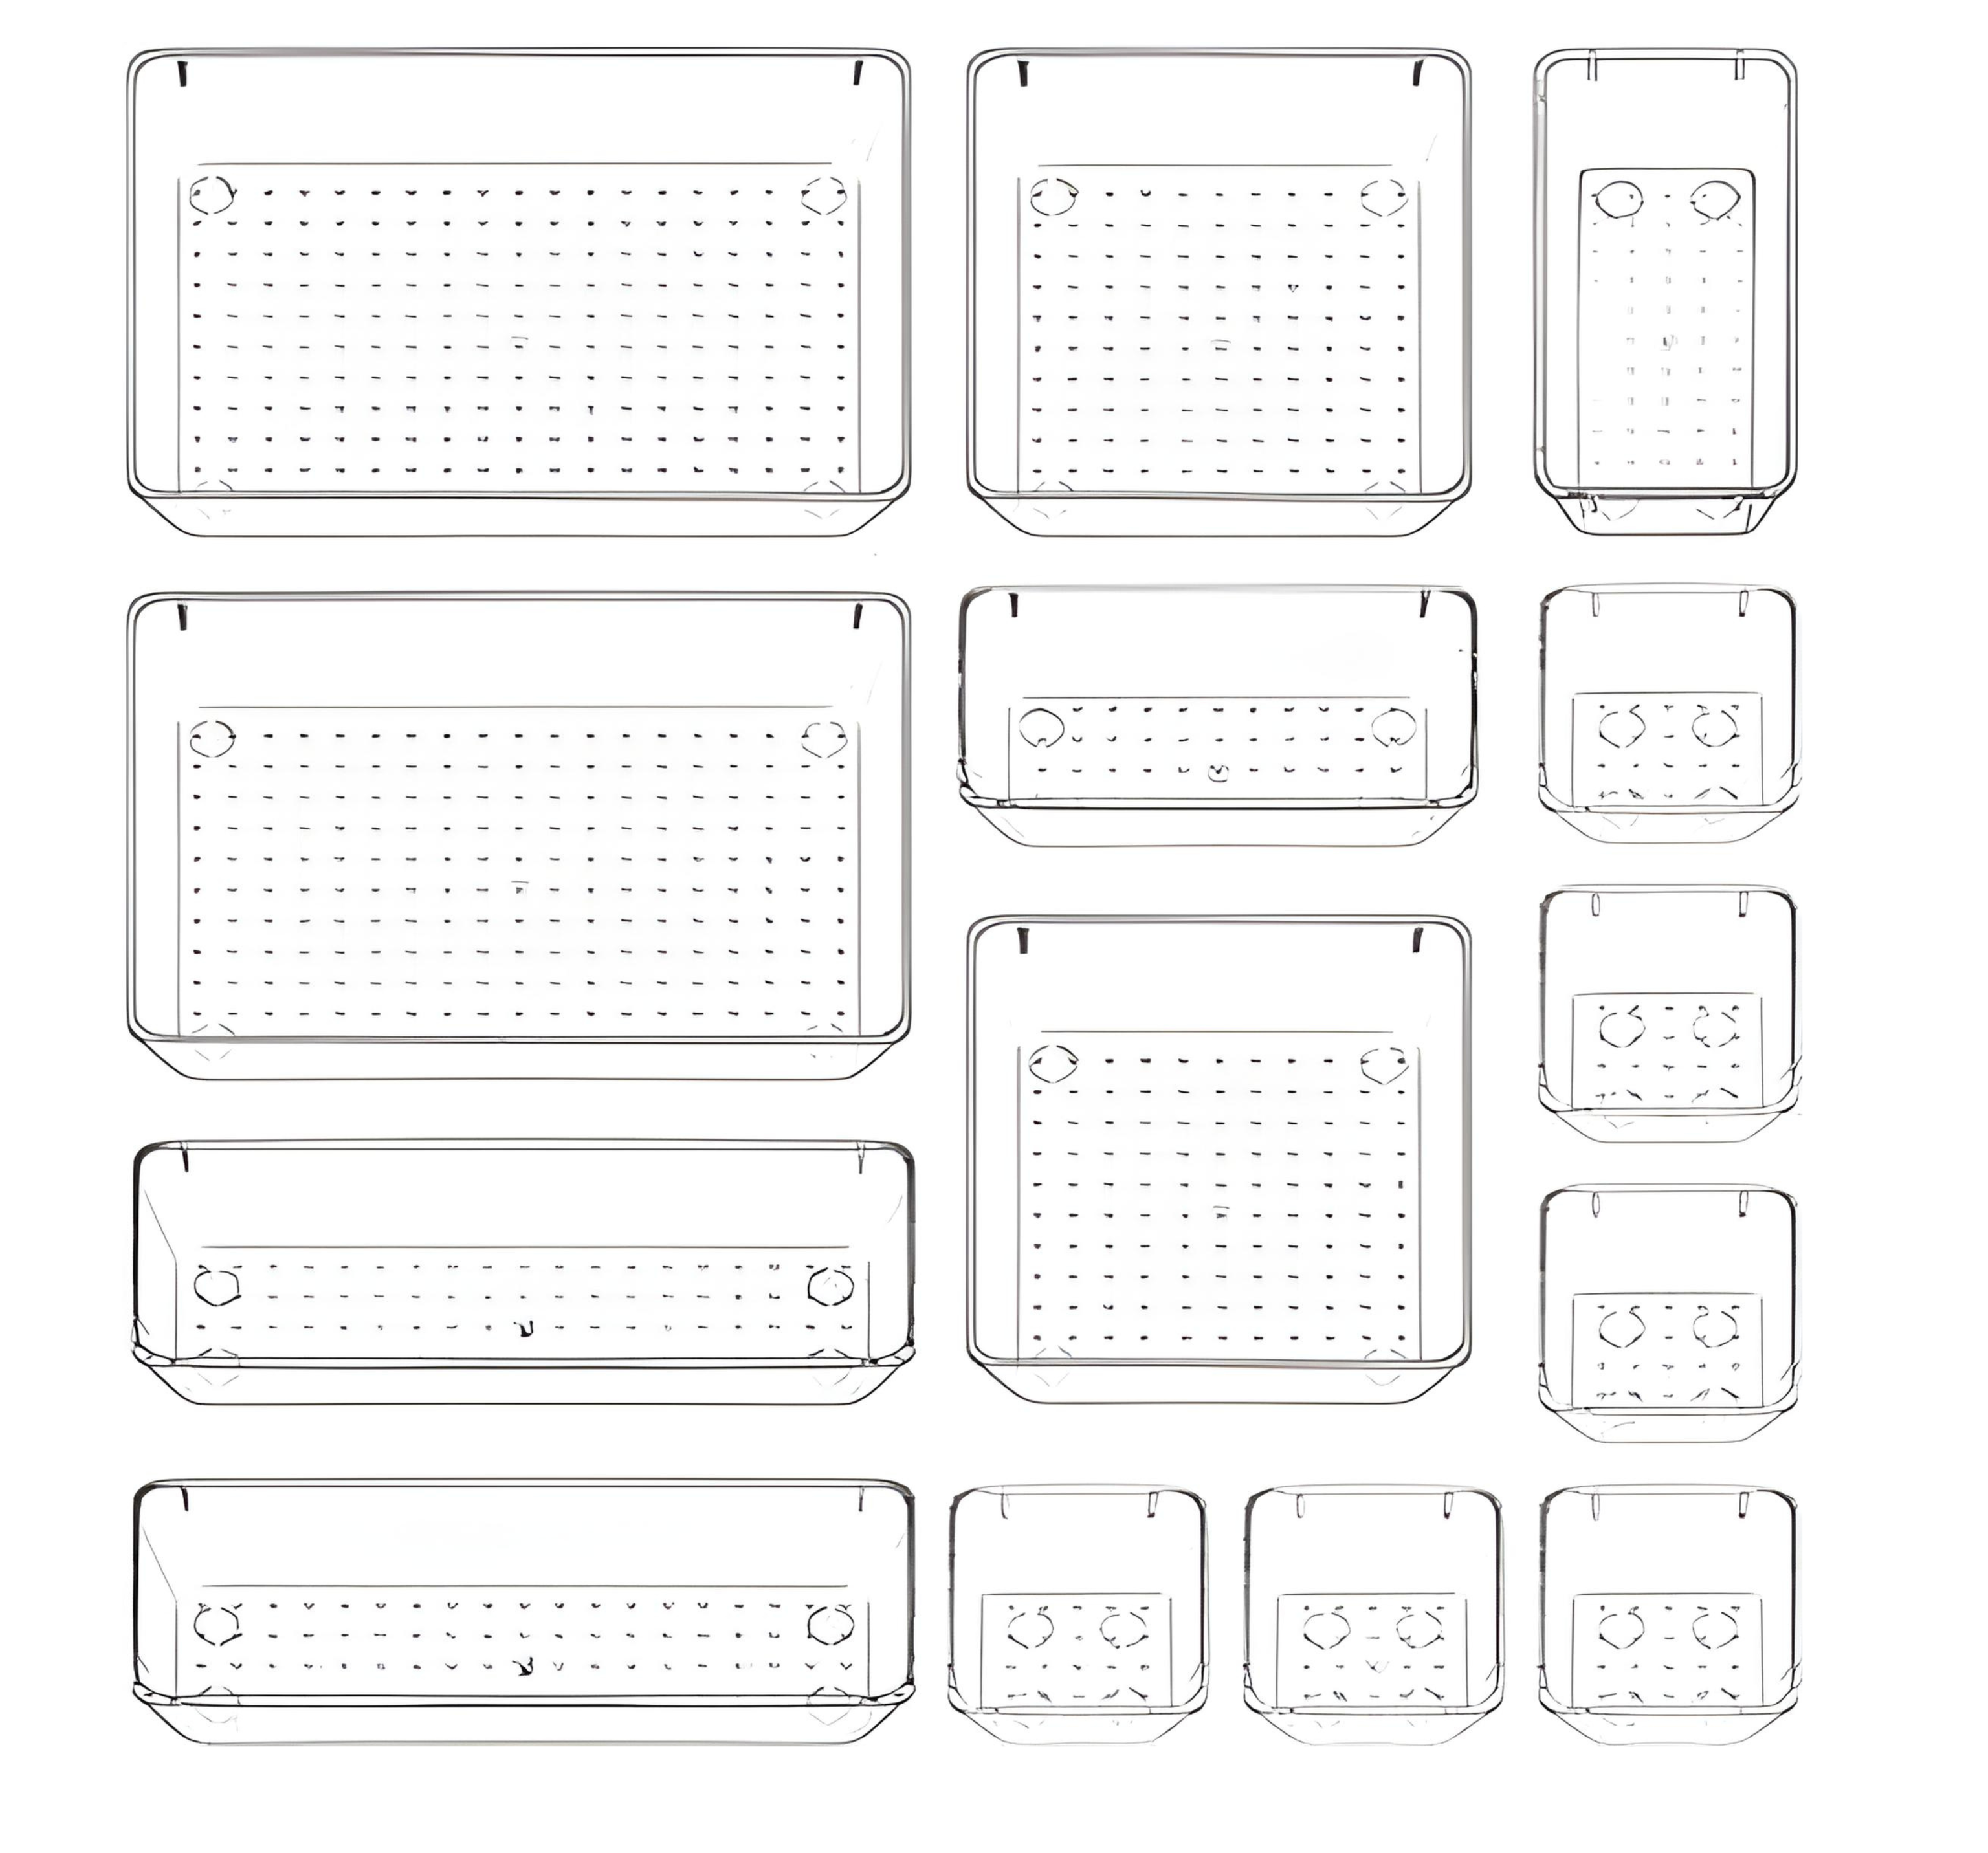 Multi-Purpose Drawer Organizer Set Different sizes Clear Vanity Tray Organizers &storage Boxes